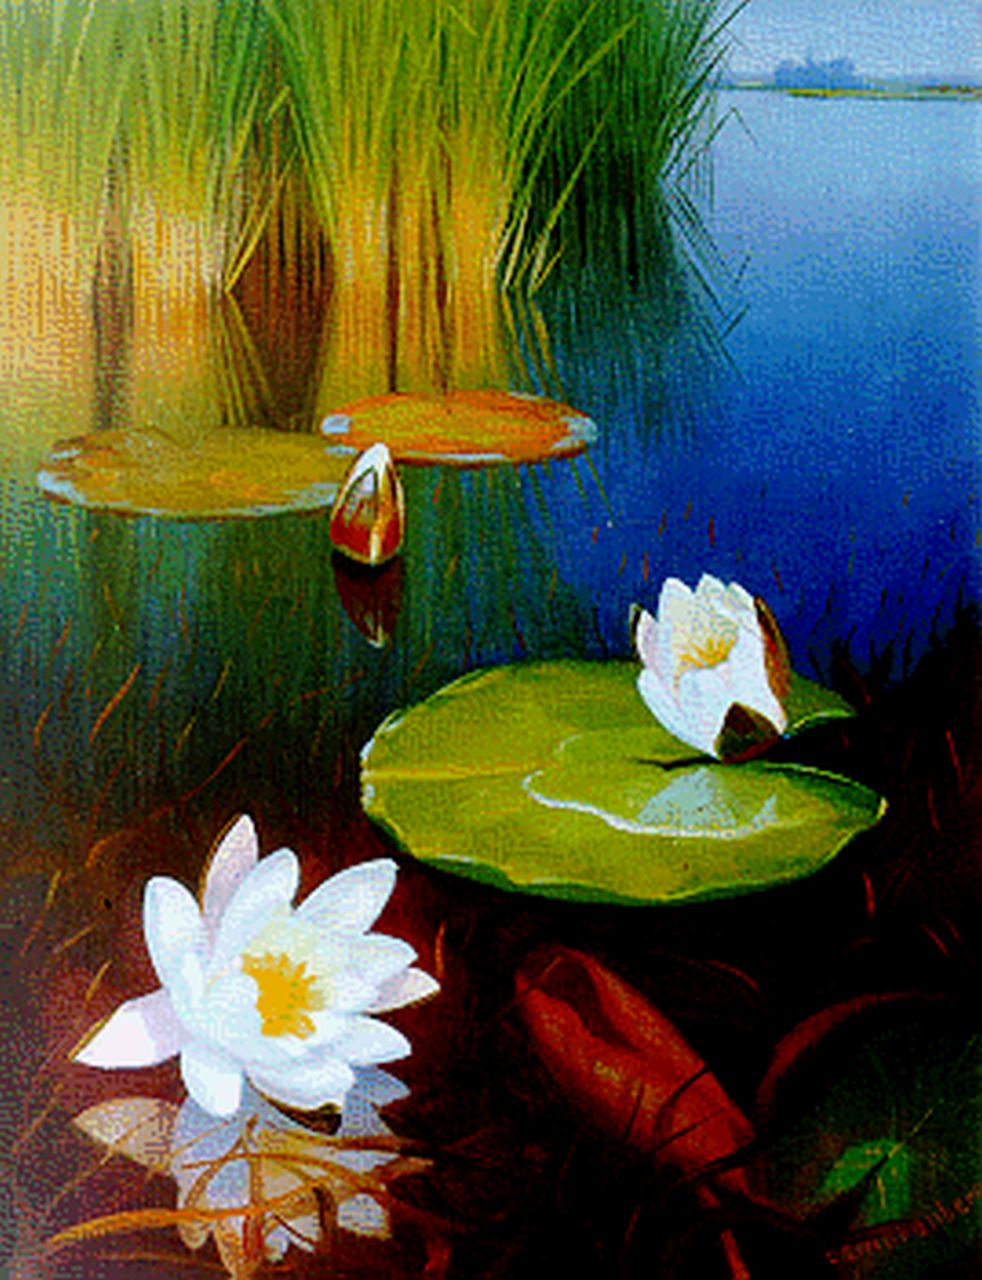 Smorenberg D.  | Dirk Smorenberg, The Loosdrechtse Plassen with water lilies, Öl auf Leinwand 50,5 x 39,0 cm, signed l.r.